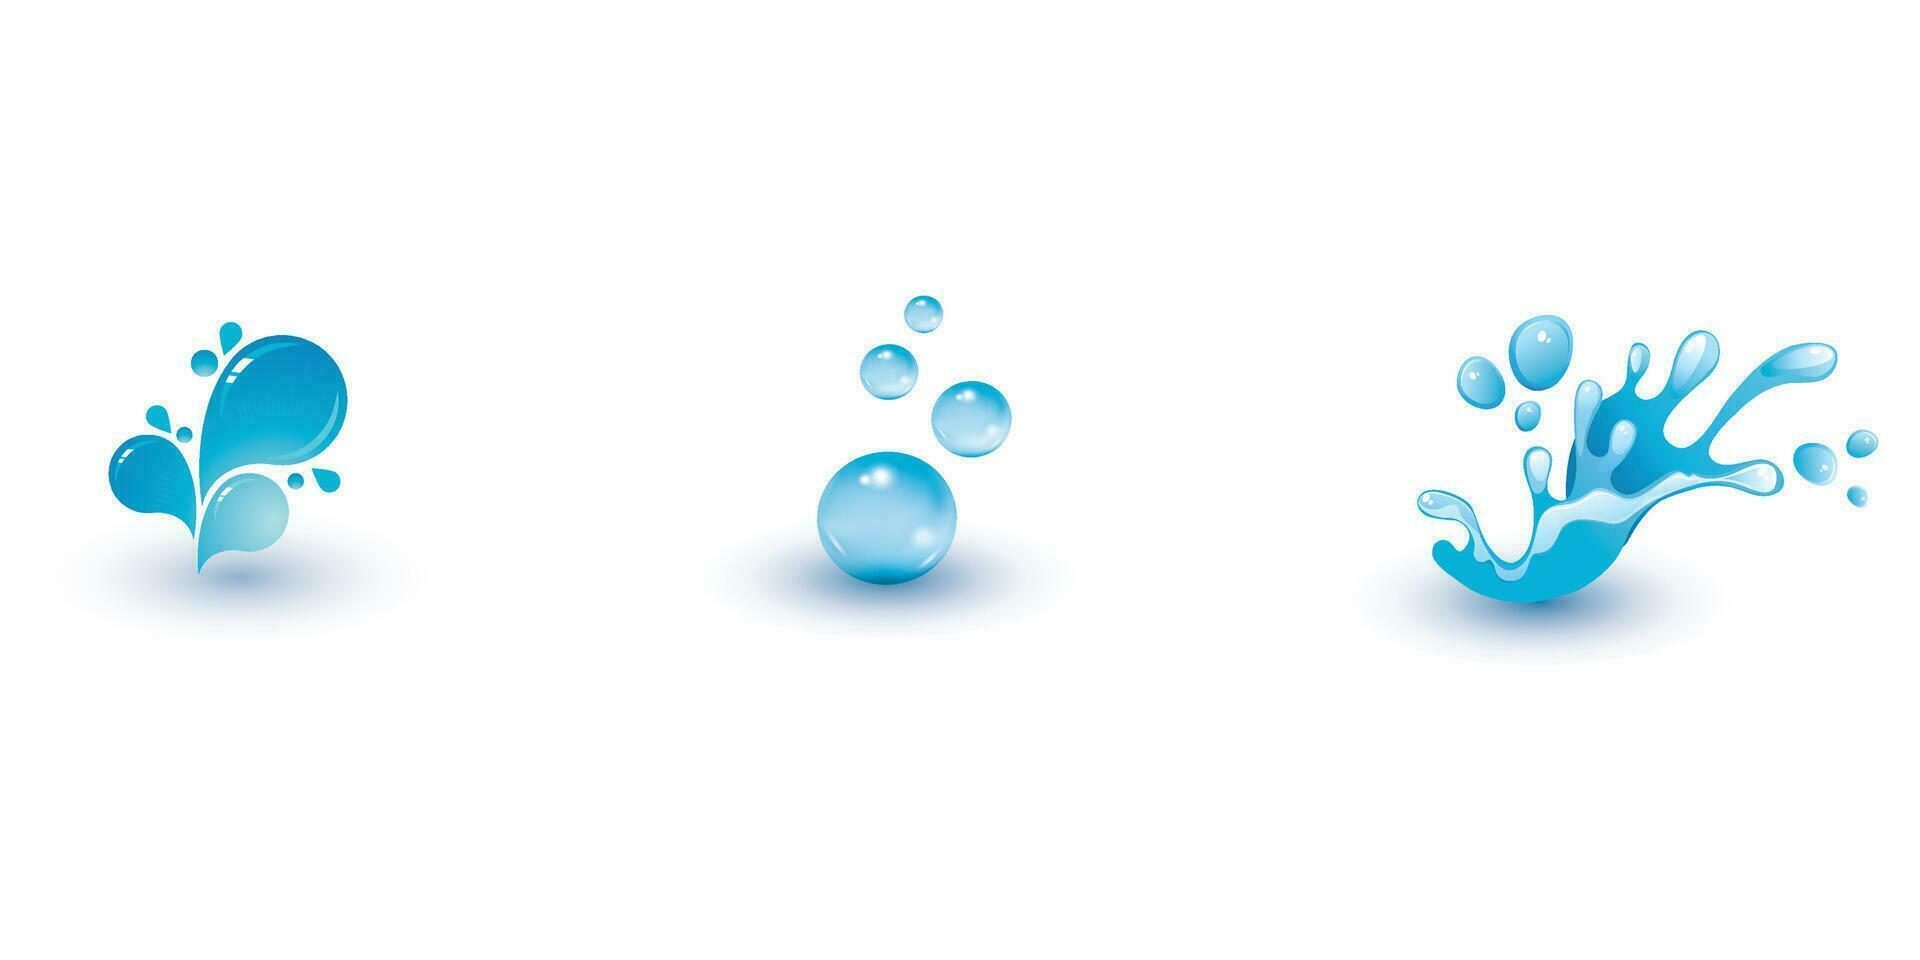 colección de vector azul agua gotas y chapoteo iconos colección de 3d goteo y chapoteo logo formas aislado blanco antecedentes